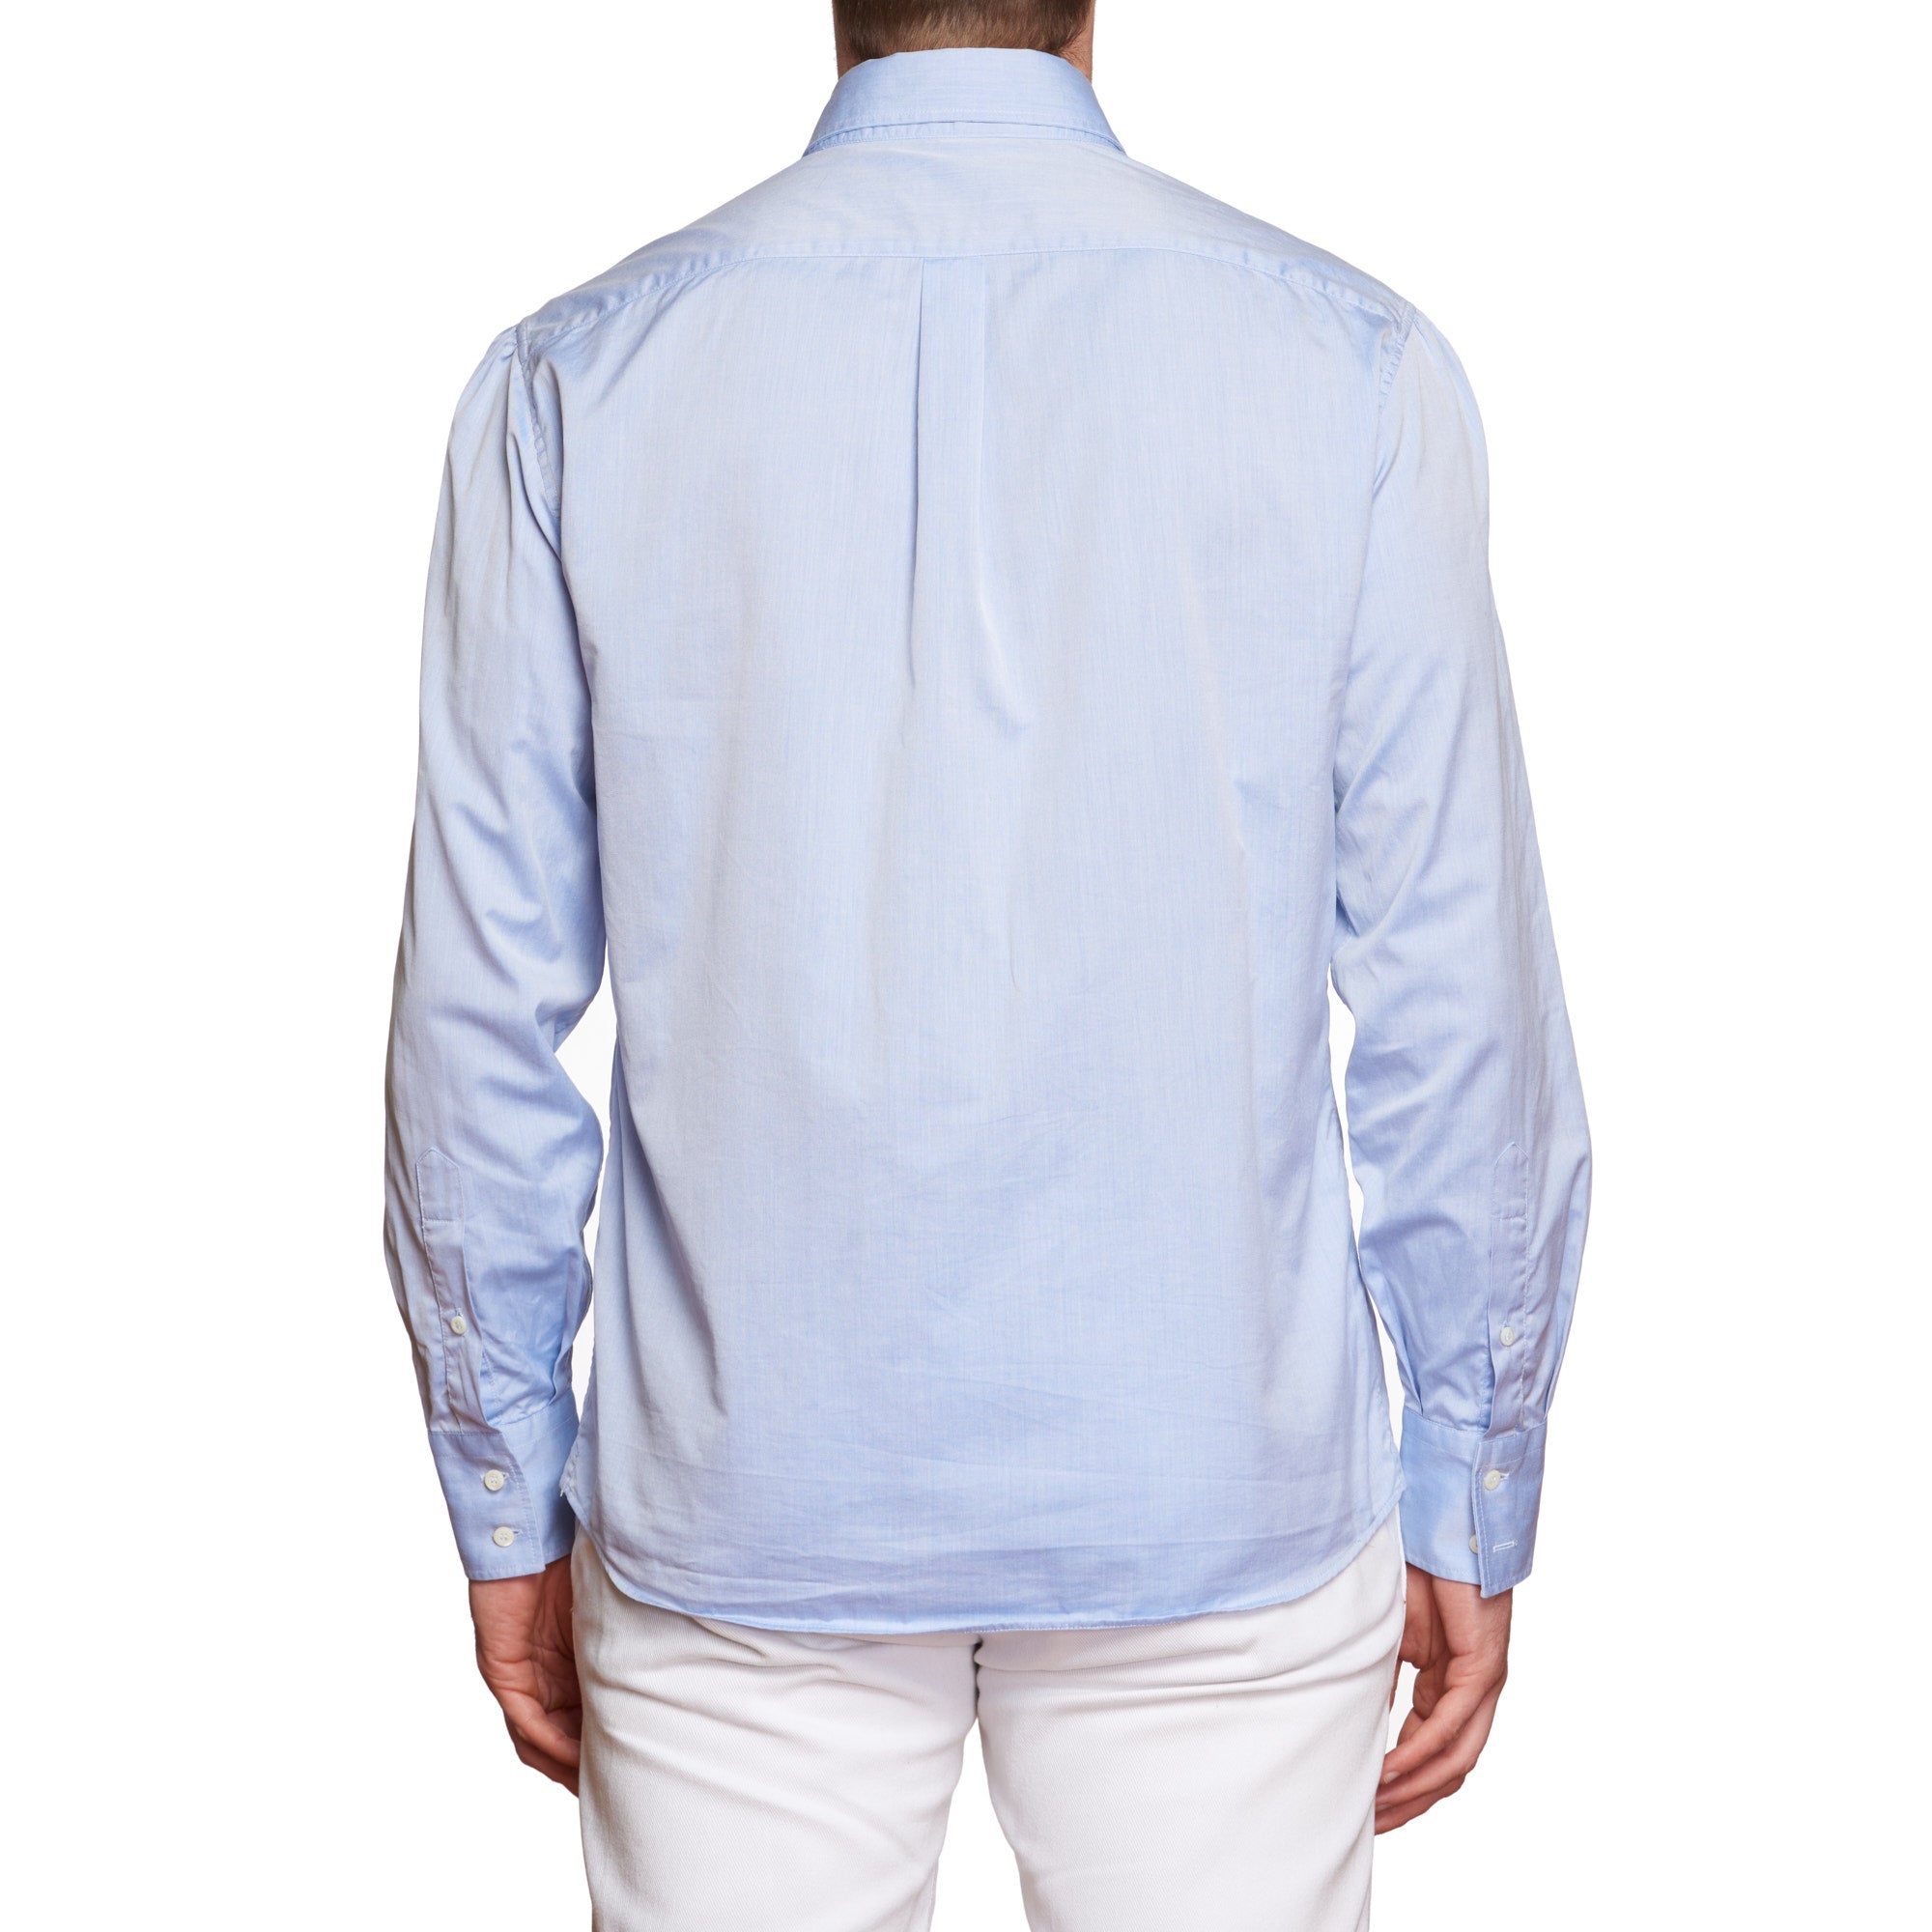 BRUNELLO CUCINELLI Blue Cotton Button-Down Shirt Size M Basic Fit BRUNELLO CUCINELLI